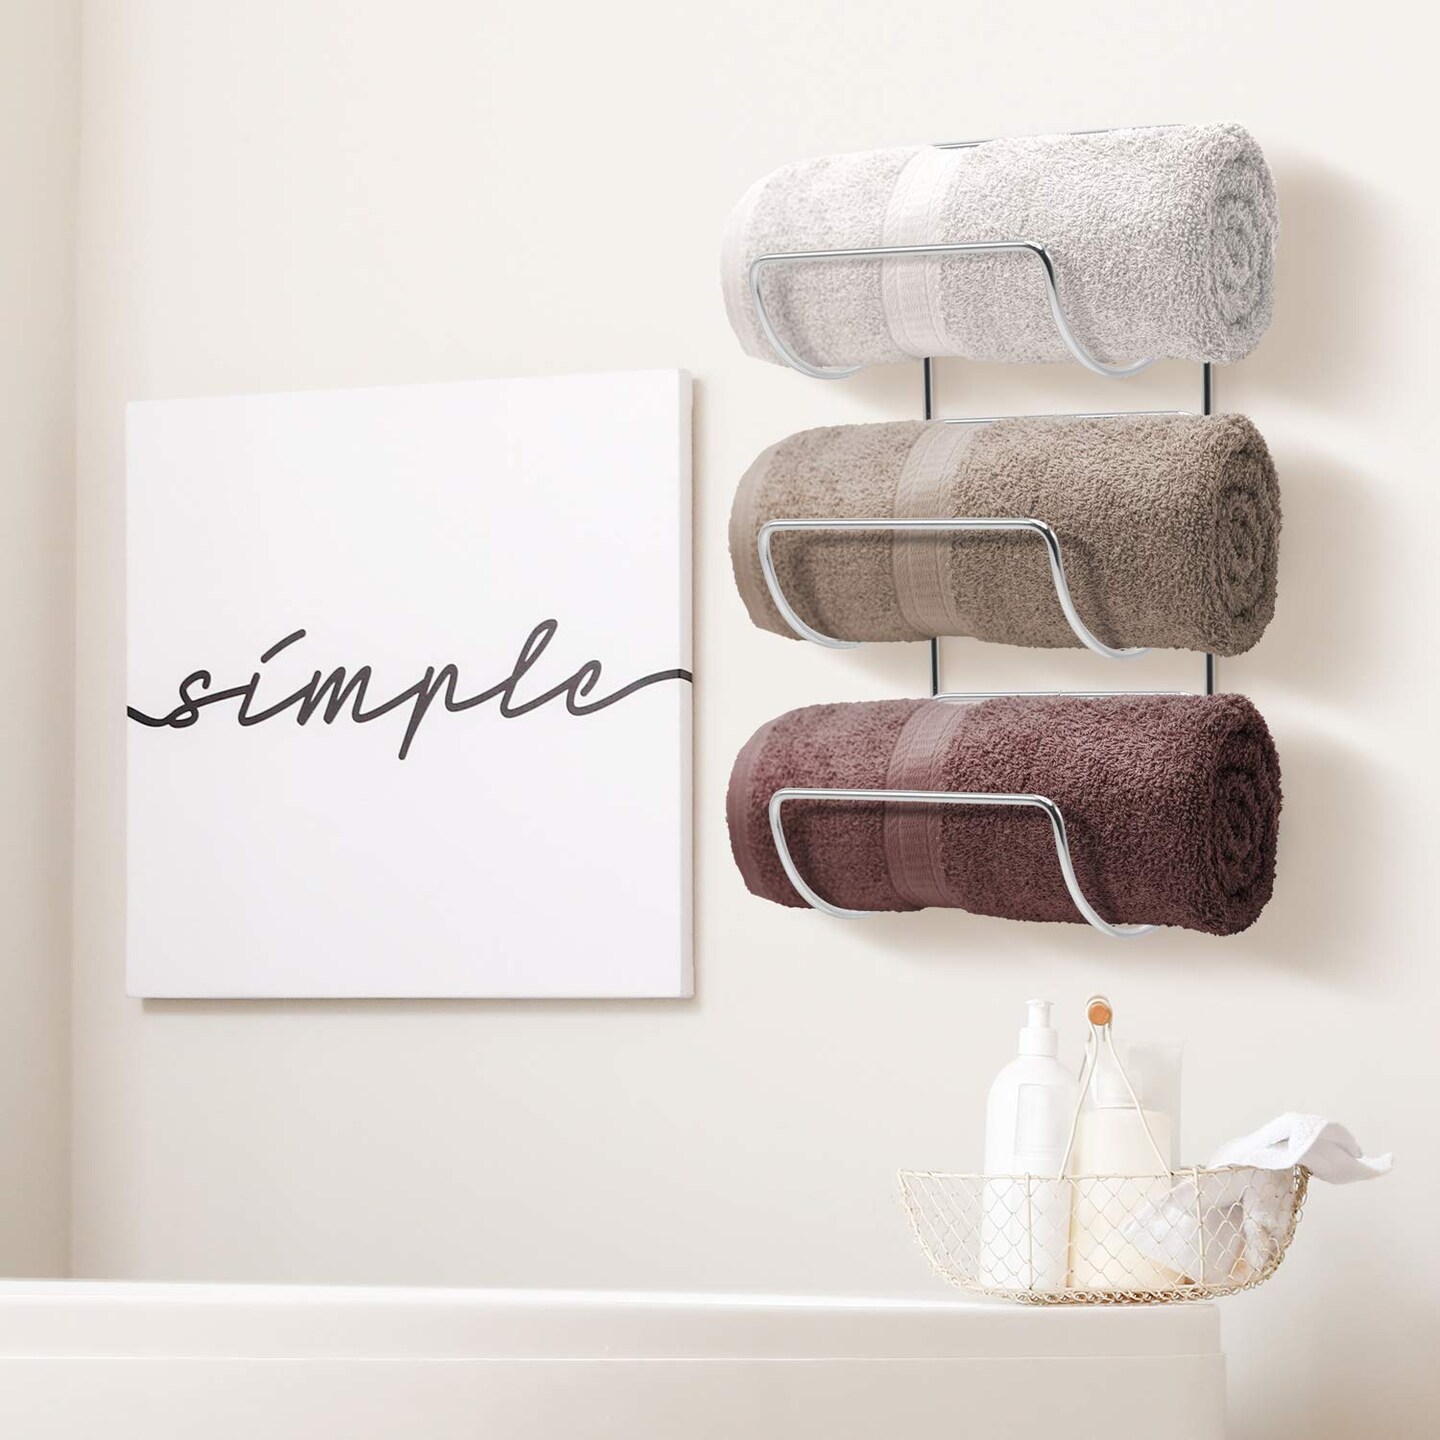 Sorbus Metal Wall Mounted Bathroom Towel Rack - Organizer for Towels, Washcloths, Hand Towels, Linens, Ideal for Bathroom, Spa, Salon